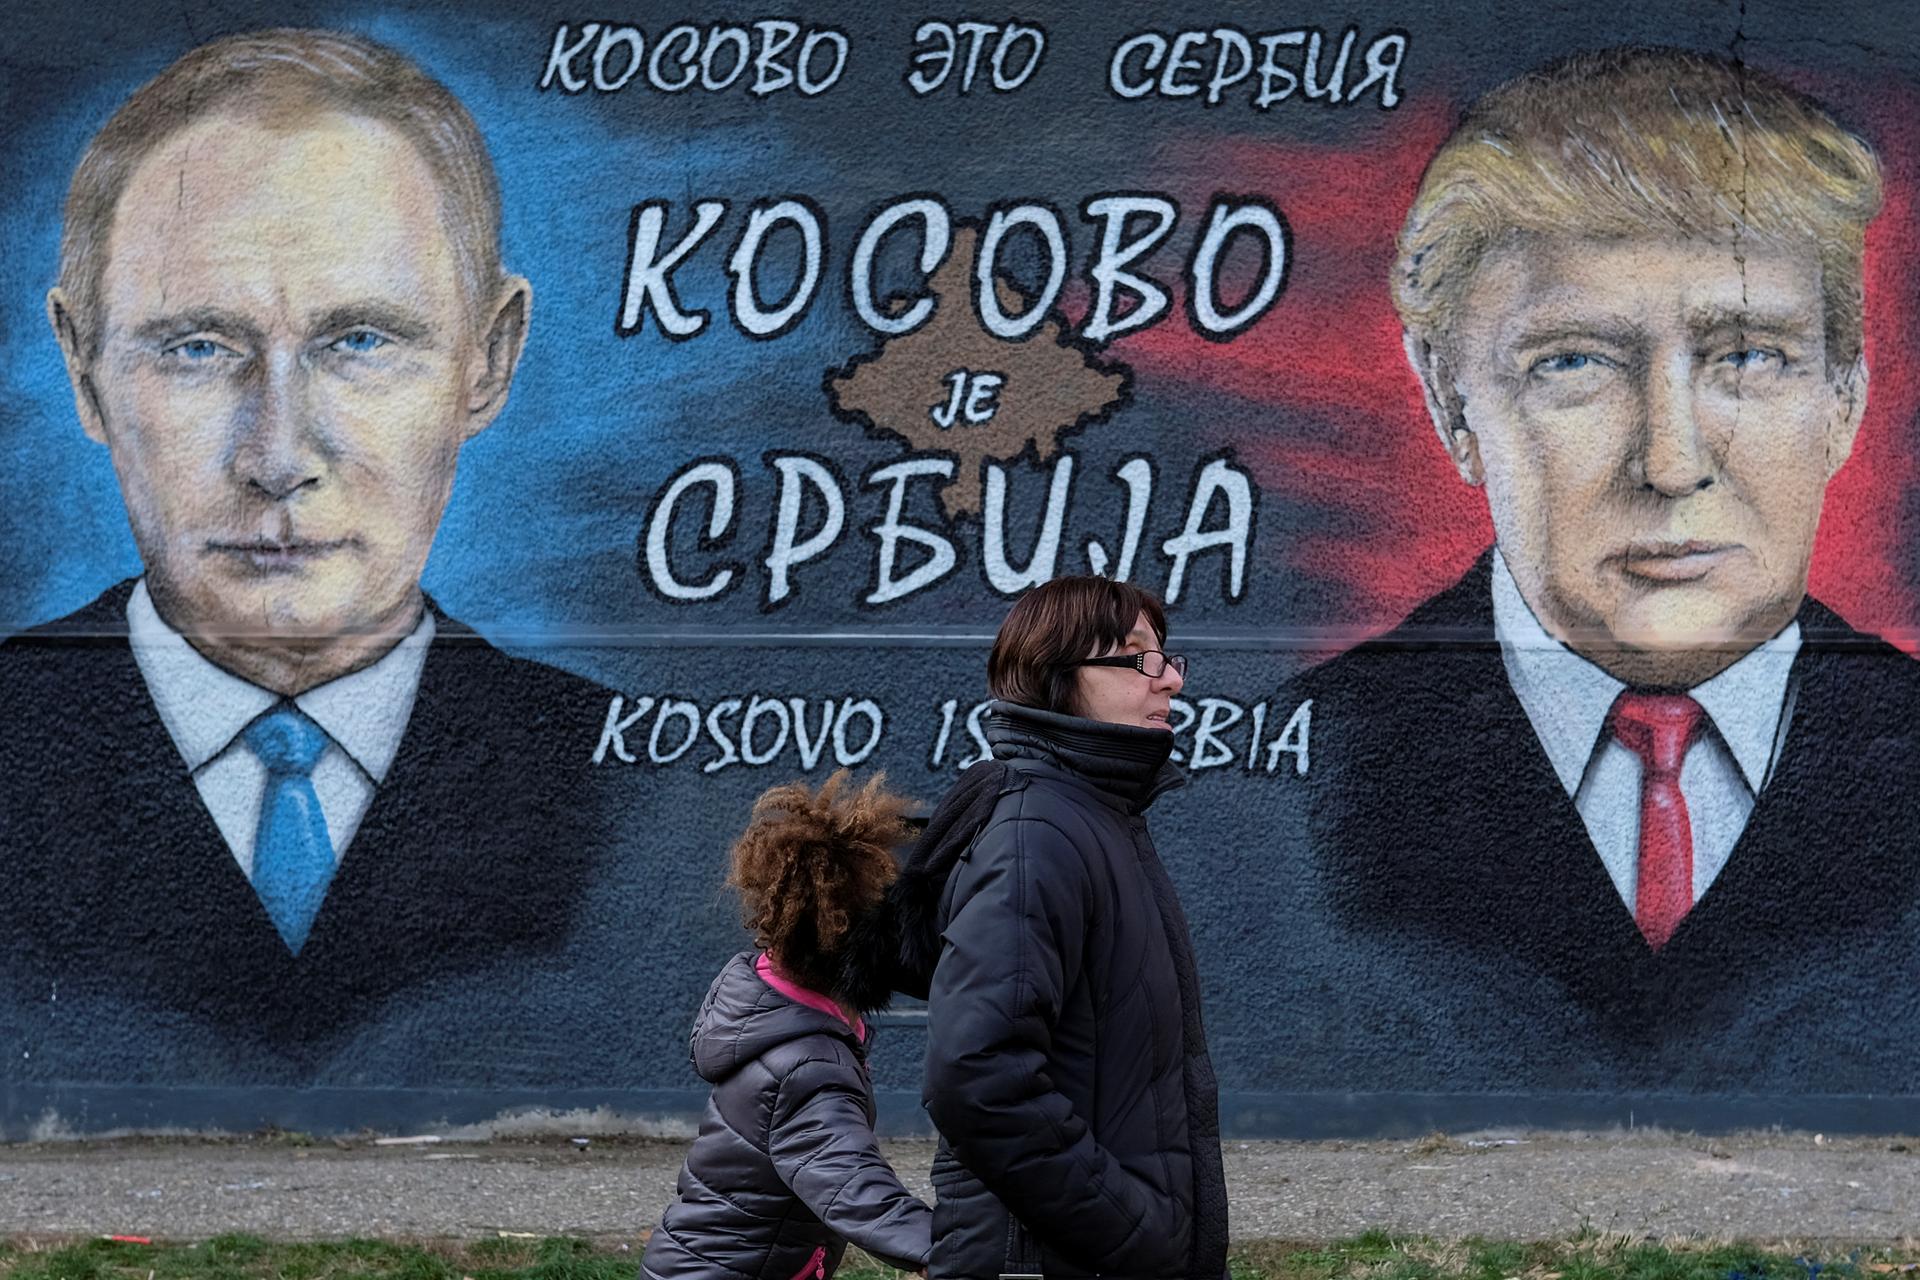 A mural of then President-elect Donald Trump and Russian President Vladimir Putin in Belgrade, Serbia, December 4, 2016.